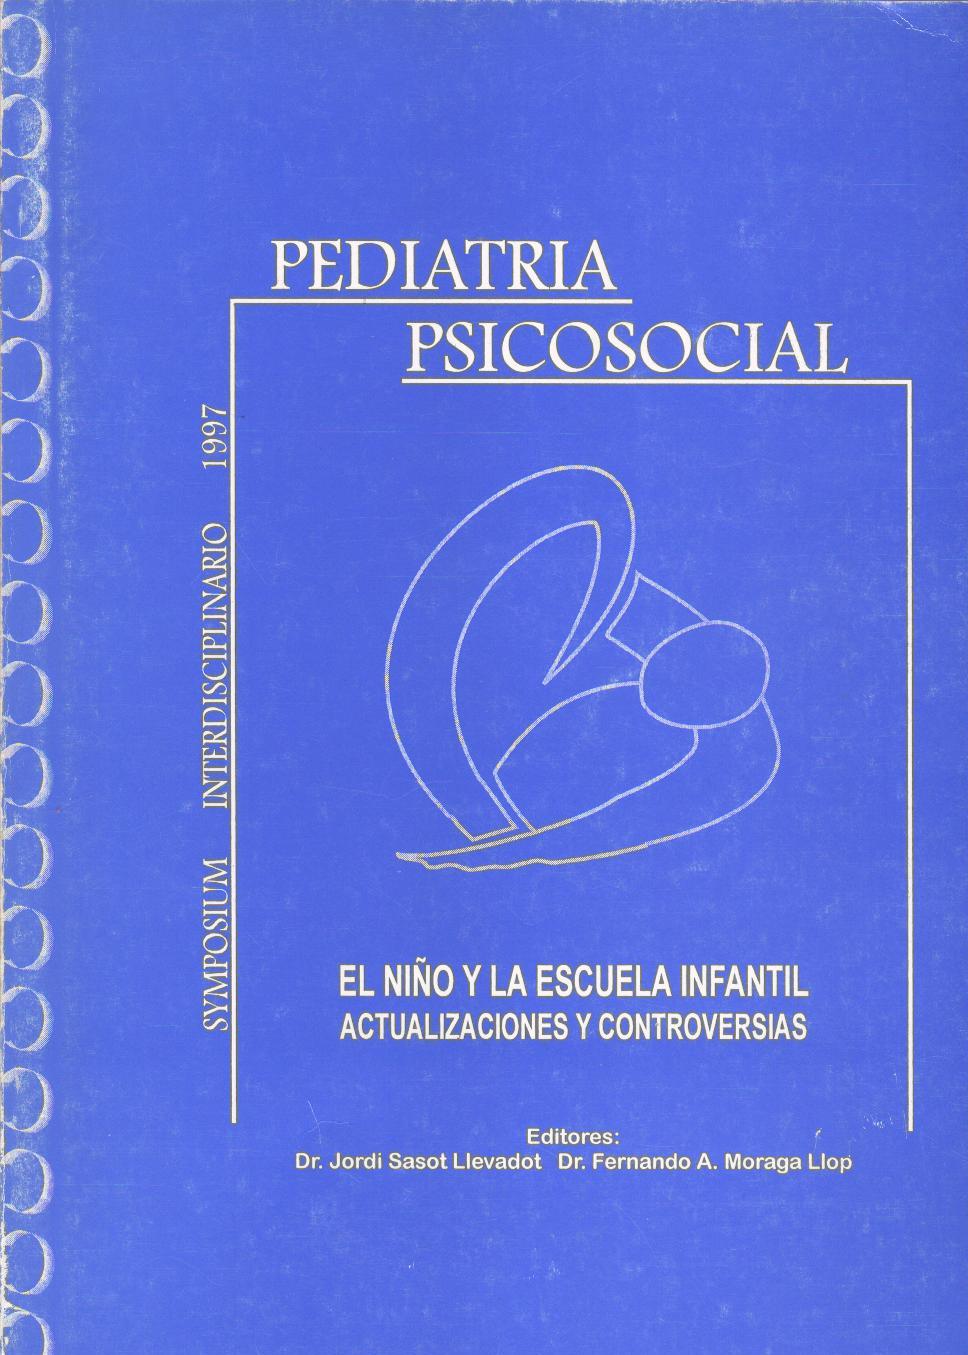 Pediatria_psicosocial-3rSymp